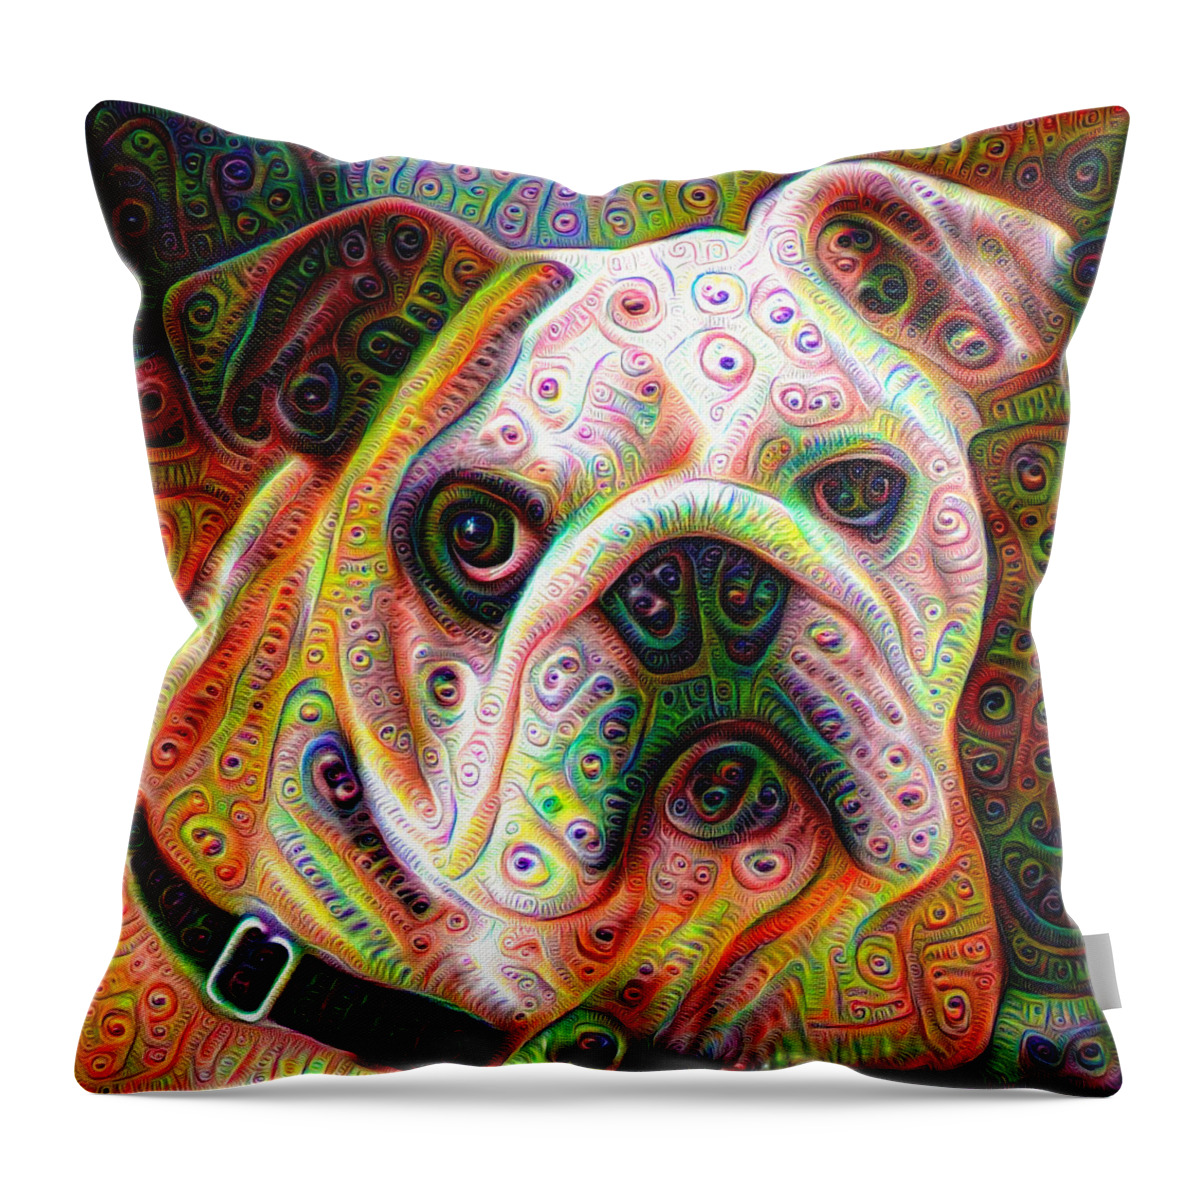 Bulldog Throw Pillow featuring the digital art Bulldog surreal deep dream image by Matthias Hauser